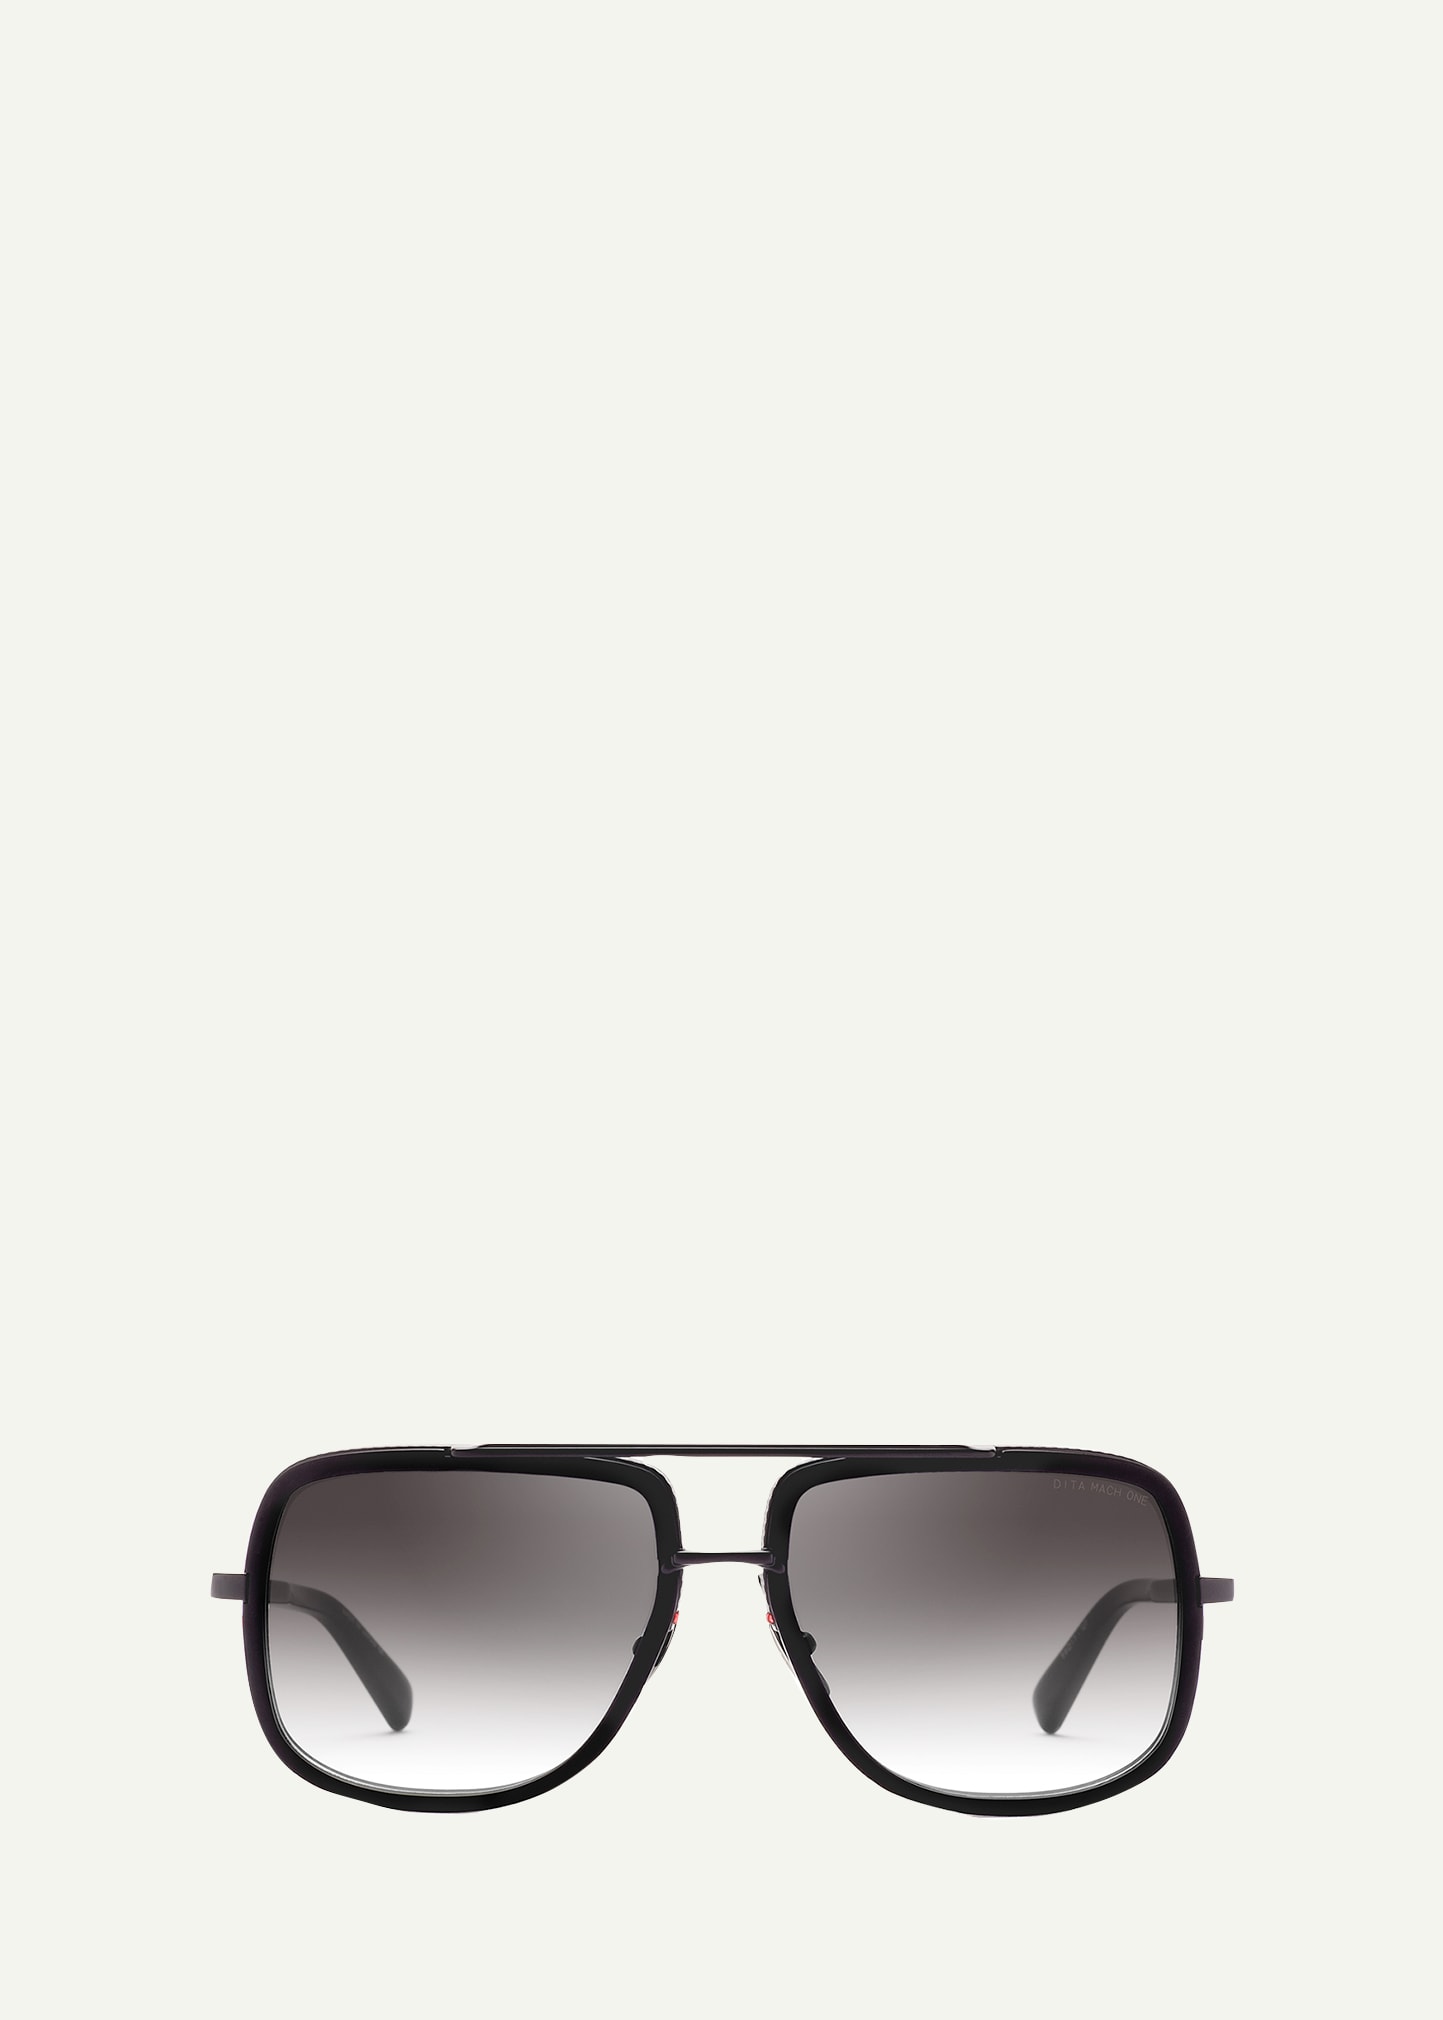 Men's Mach One Sunglasses